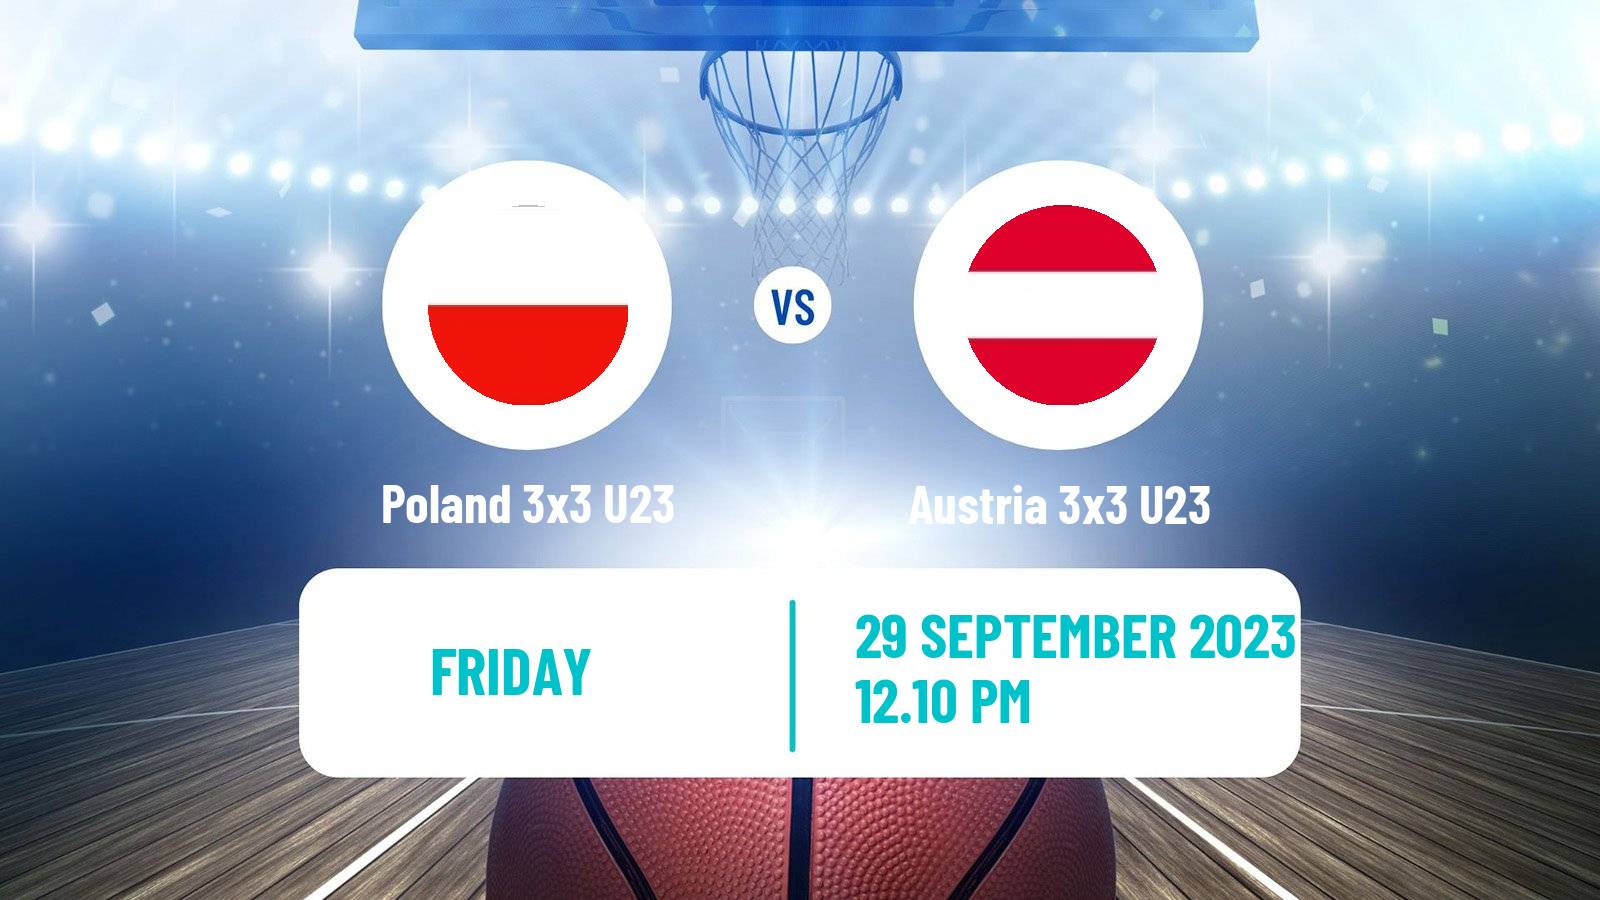 Basketball World Cup Basketball 3x3 U23 Poland 3x3 U23 - Austria 3x3 U23